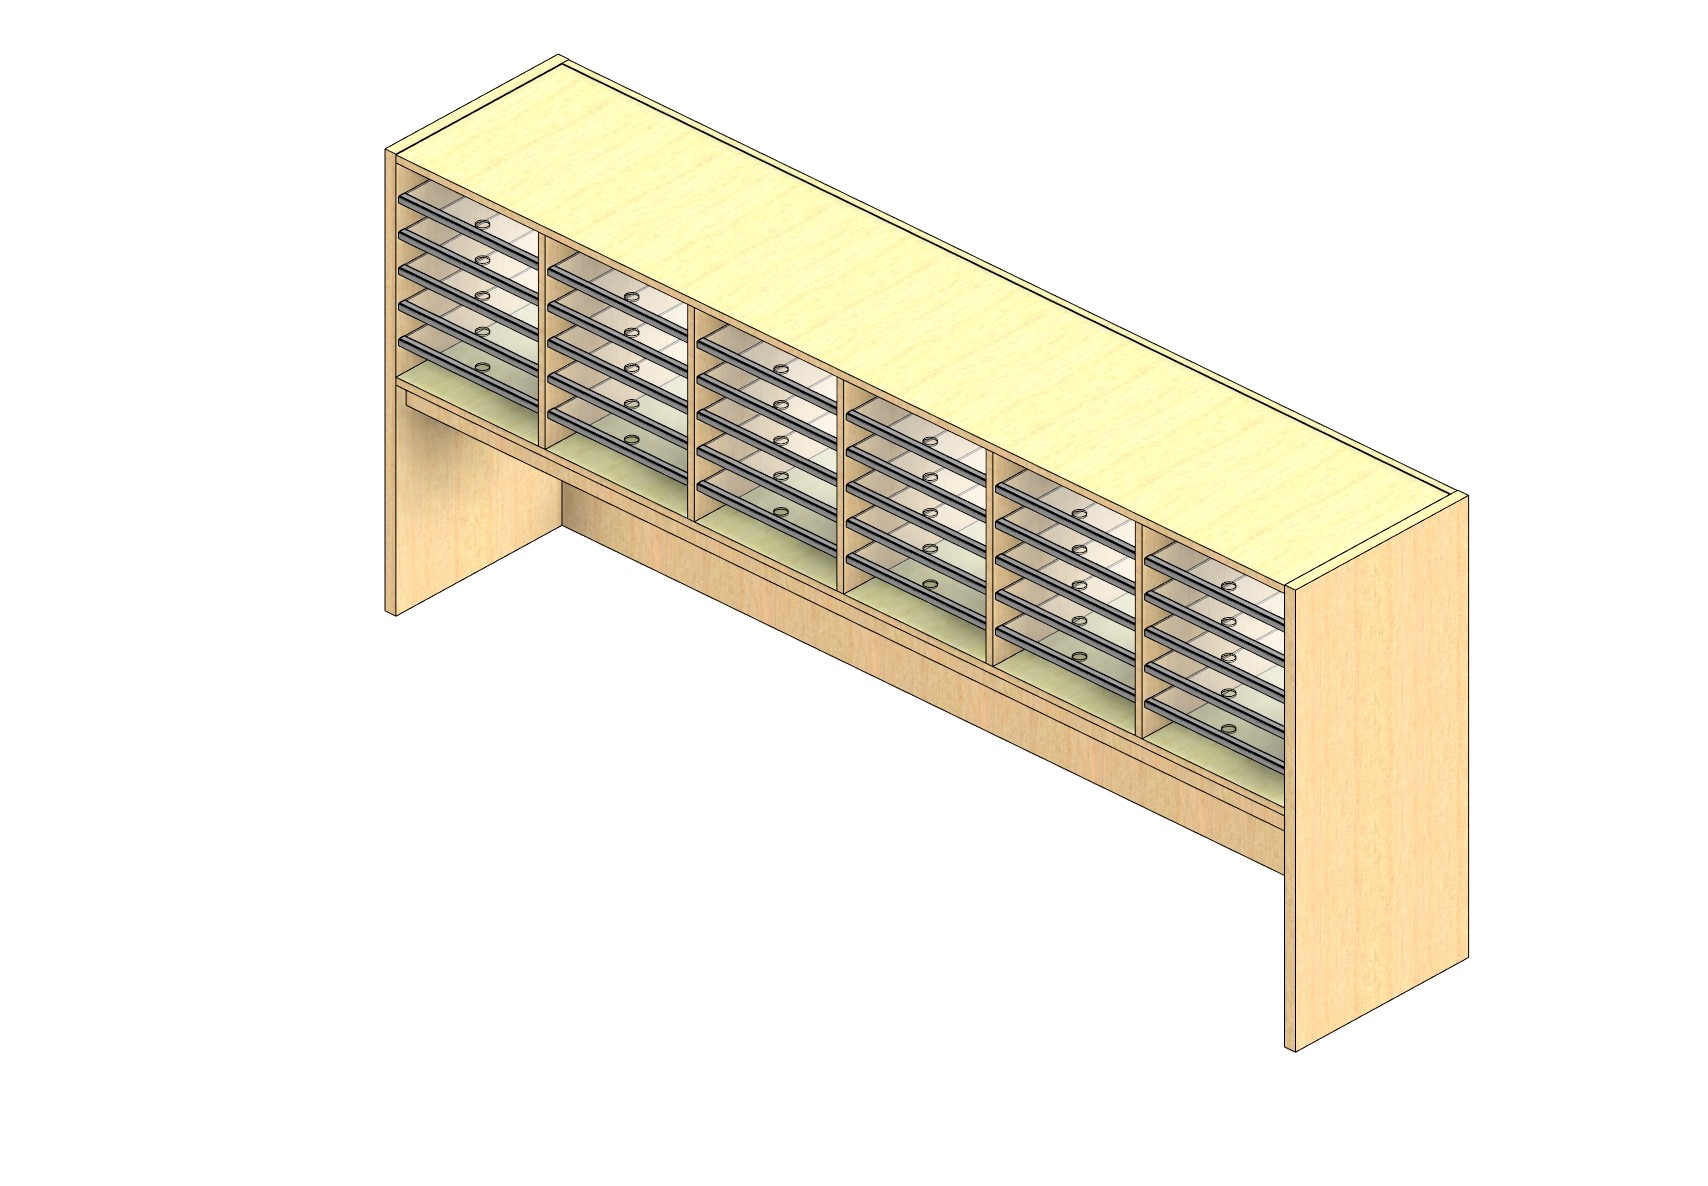 Oversize Sized Open Back Sort Module - 6 Columns - 18" Sorting Height w/ 18" Riser